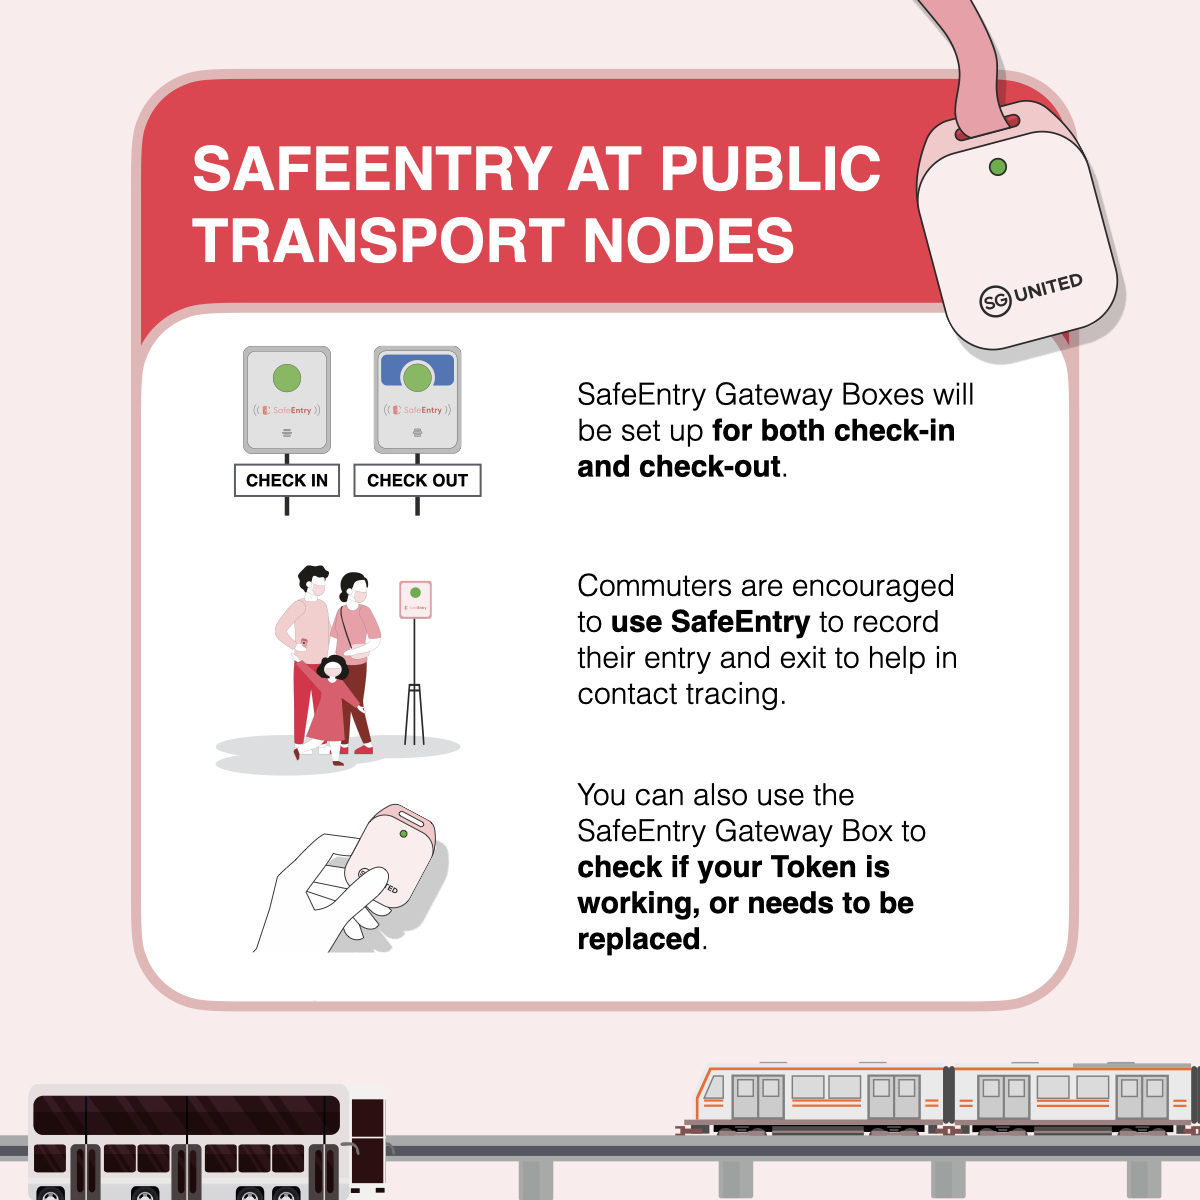 SafeEntry at public transport notes